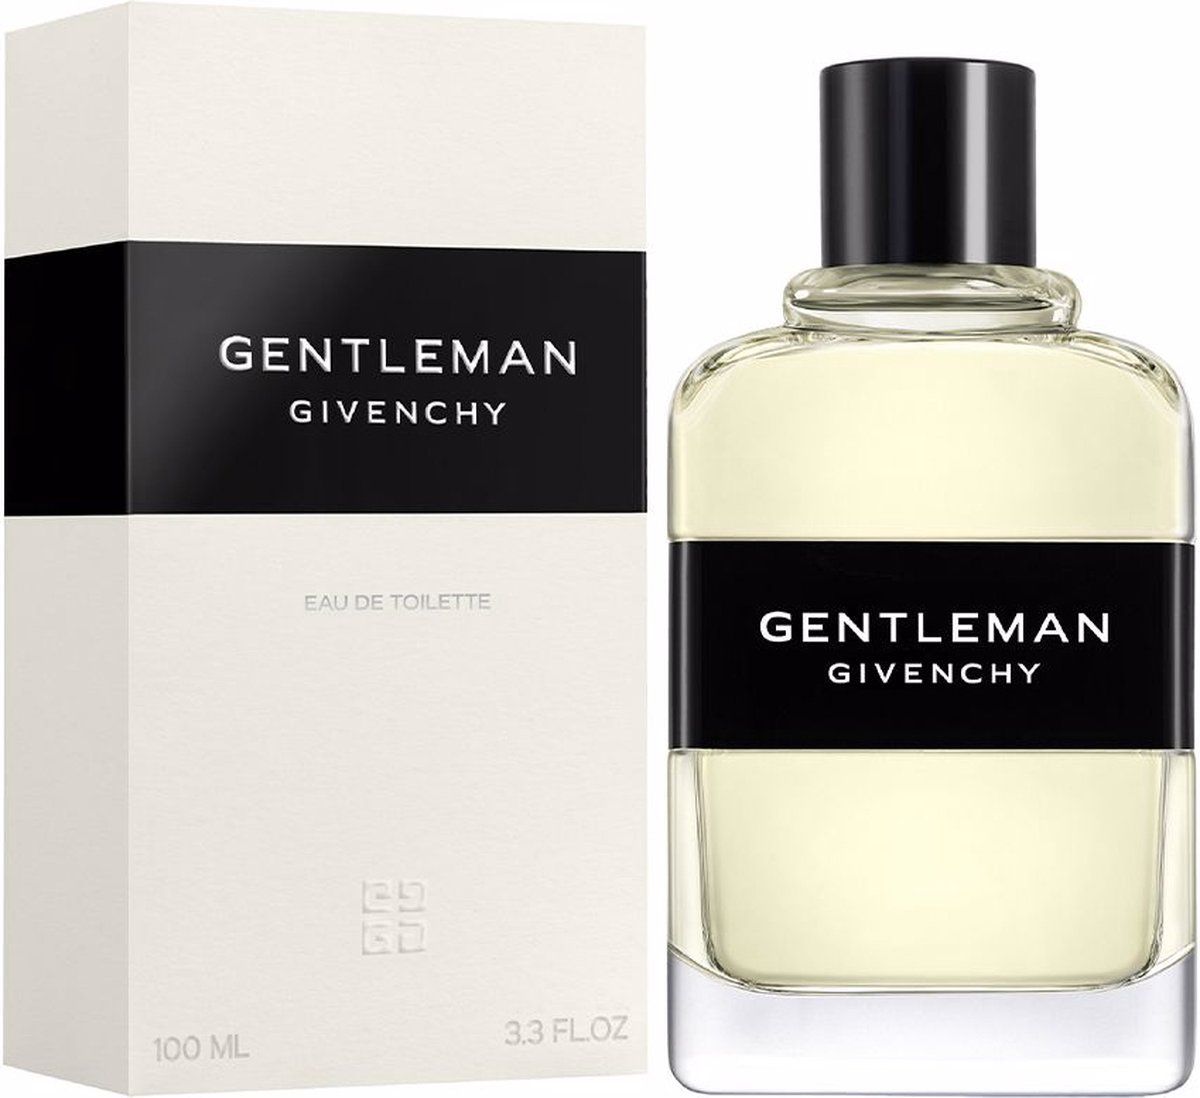 Givenchy Gentleman Eau de toilette spray 100 ml